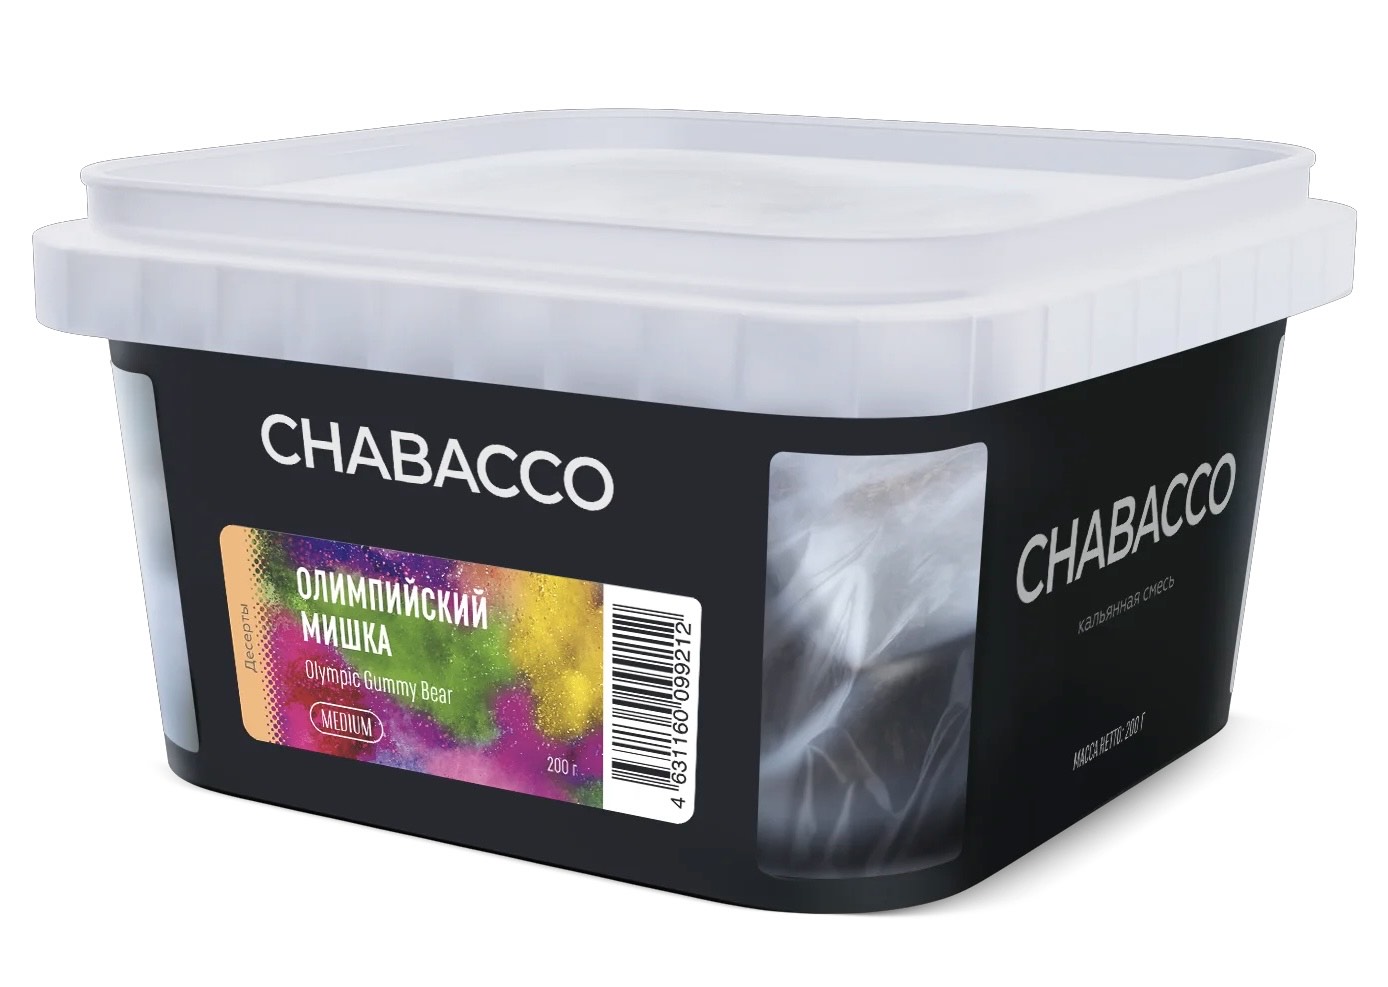 Chabacco - OLYMPIC GUMMY BEAR - ( ТРОПИЧЕСКИЙ С КИСЛИНКОЙ ) - 200 g